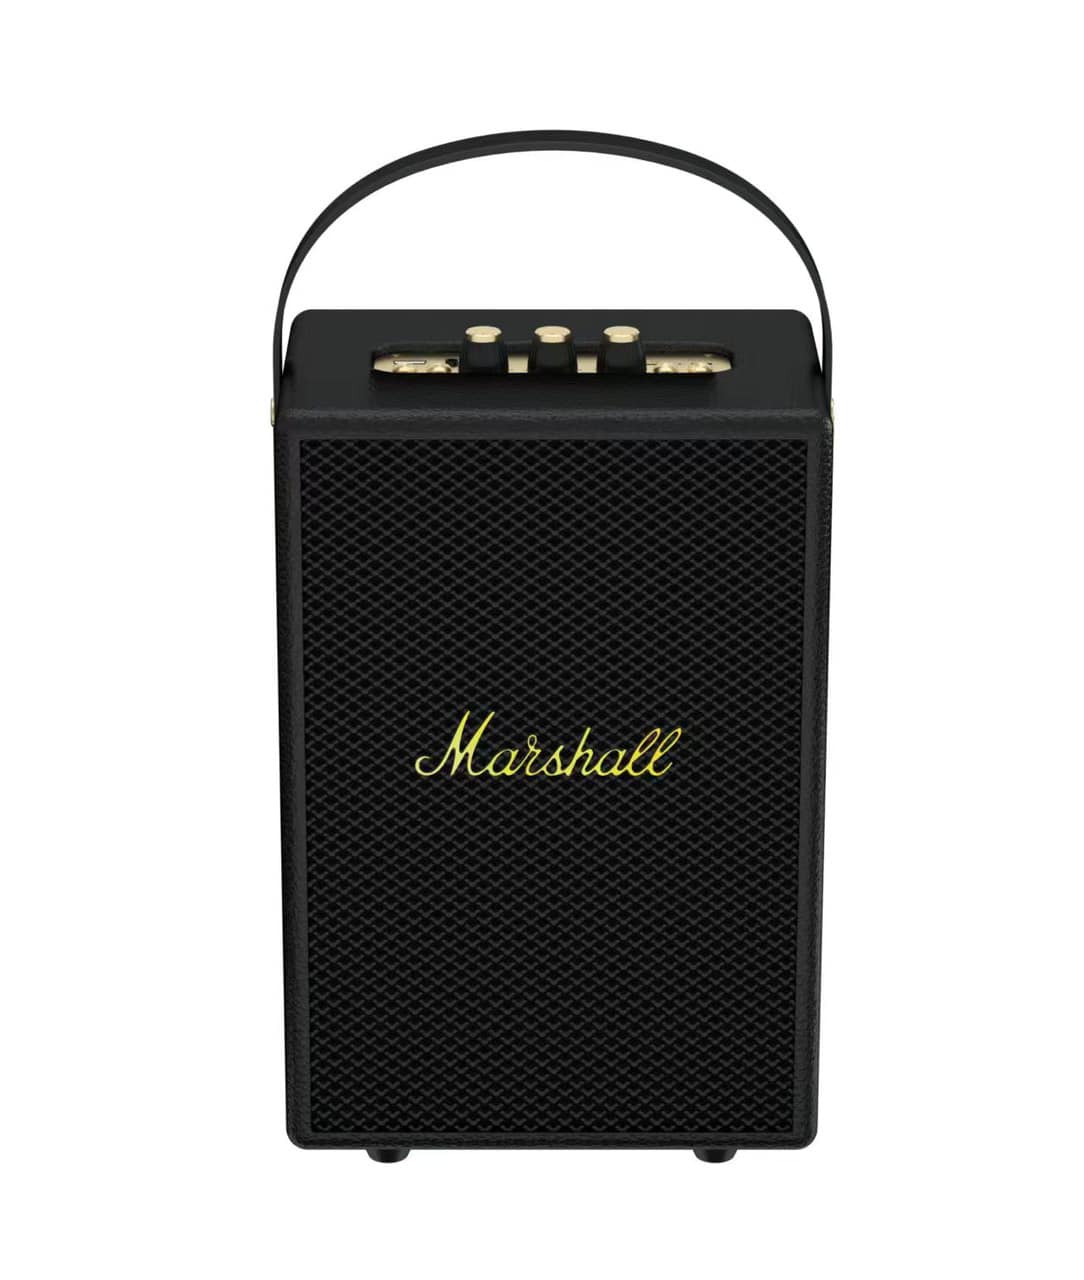 Loa Bluetooth Marshall M16 Thế Hệ Mới 2023 Bass Mạnh, Âm Thanh Hay, Full Box New 100% ,Bluetooth 5.2. Loa Marshall M16